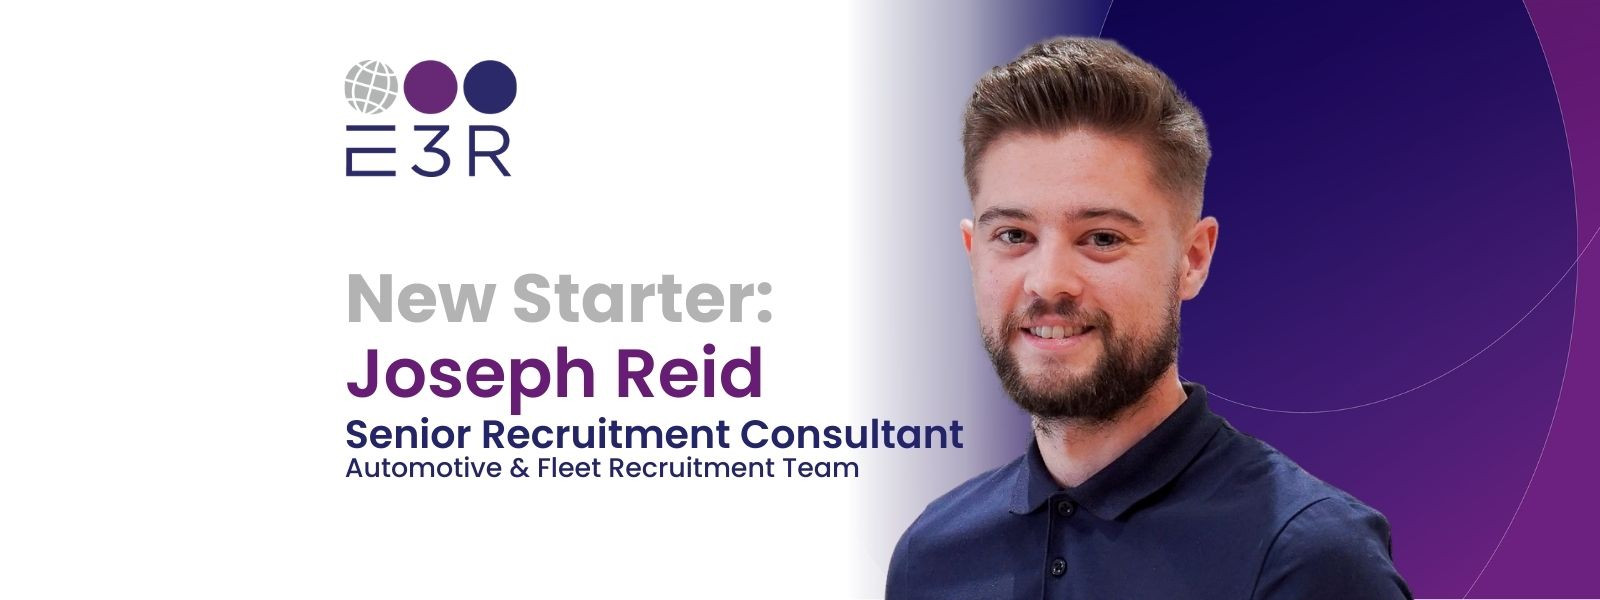 E3R’s Automotive & Fleet Recruitment team welcomes new Senior Recruitment Consultant, Joseph Reid